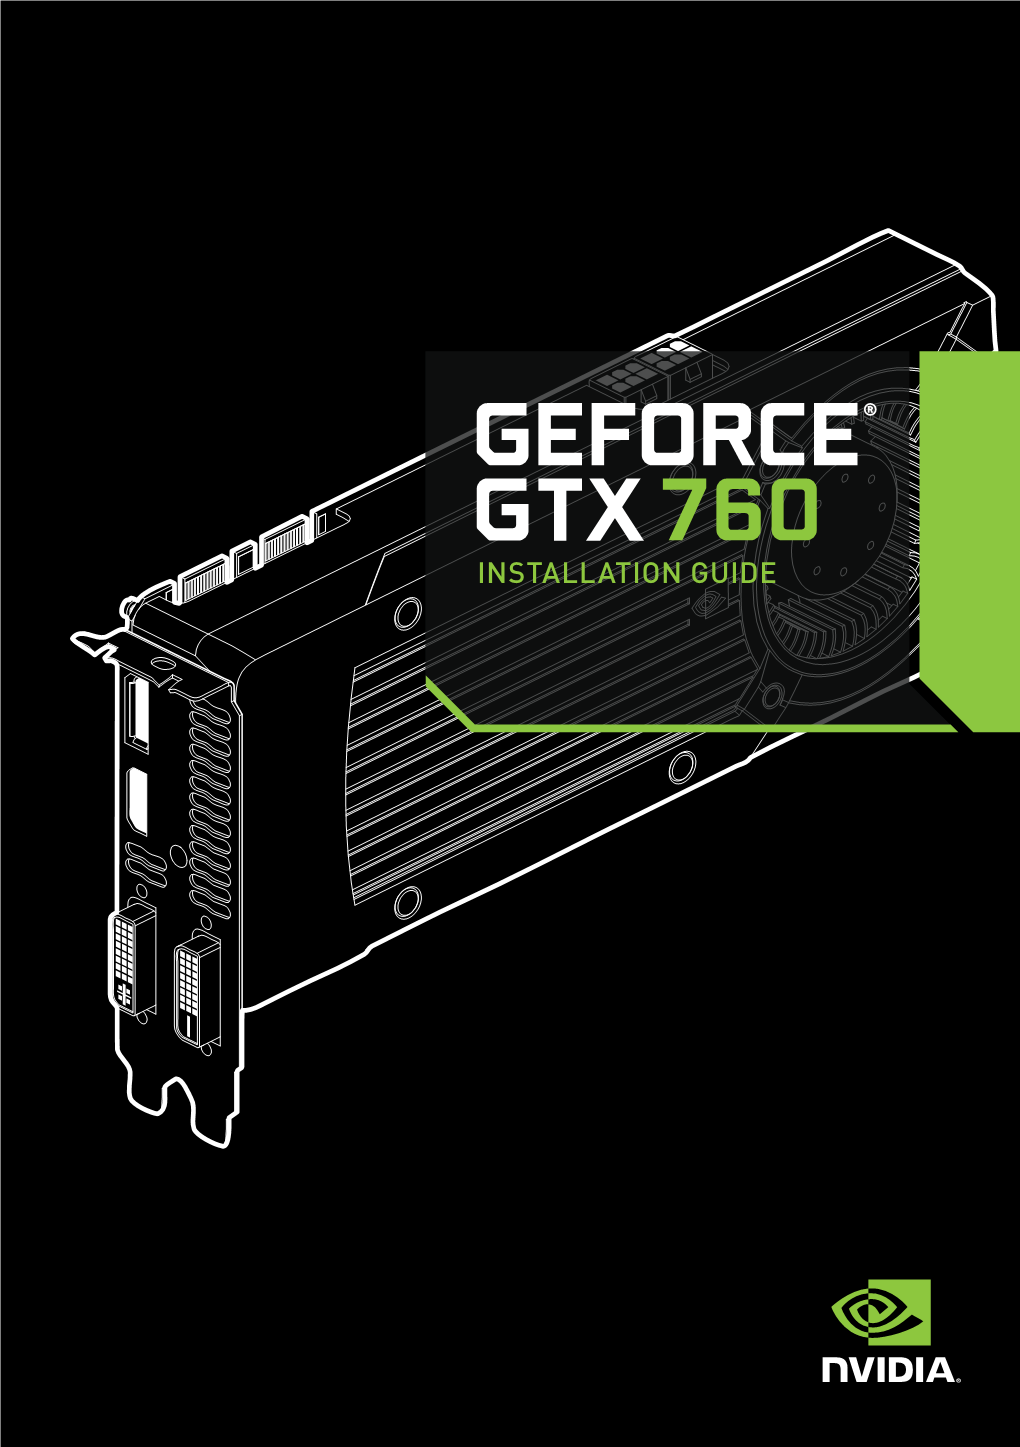 NVIDIA Geforce GTX 760